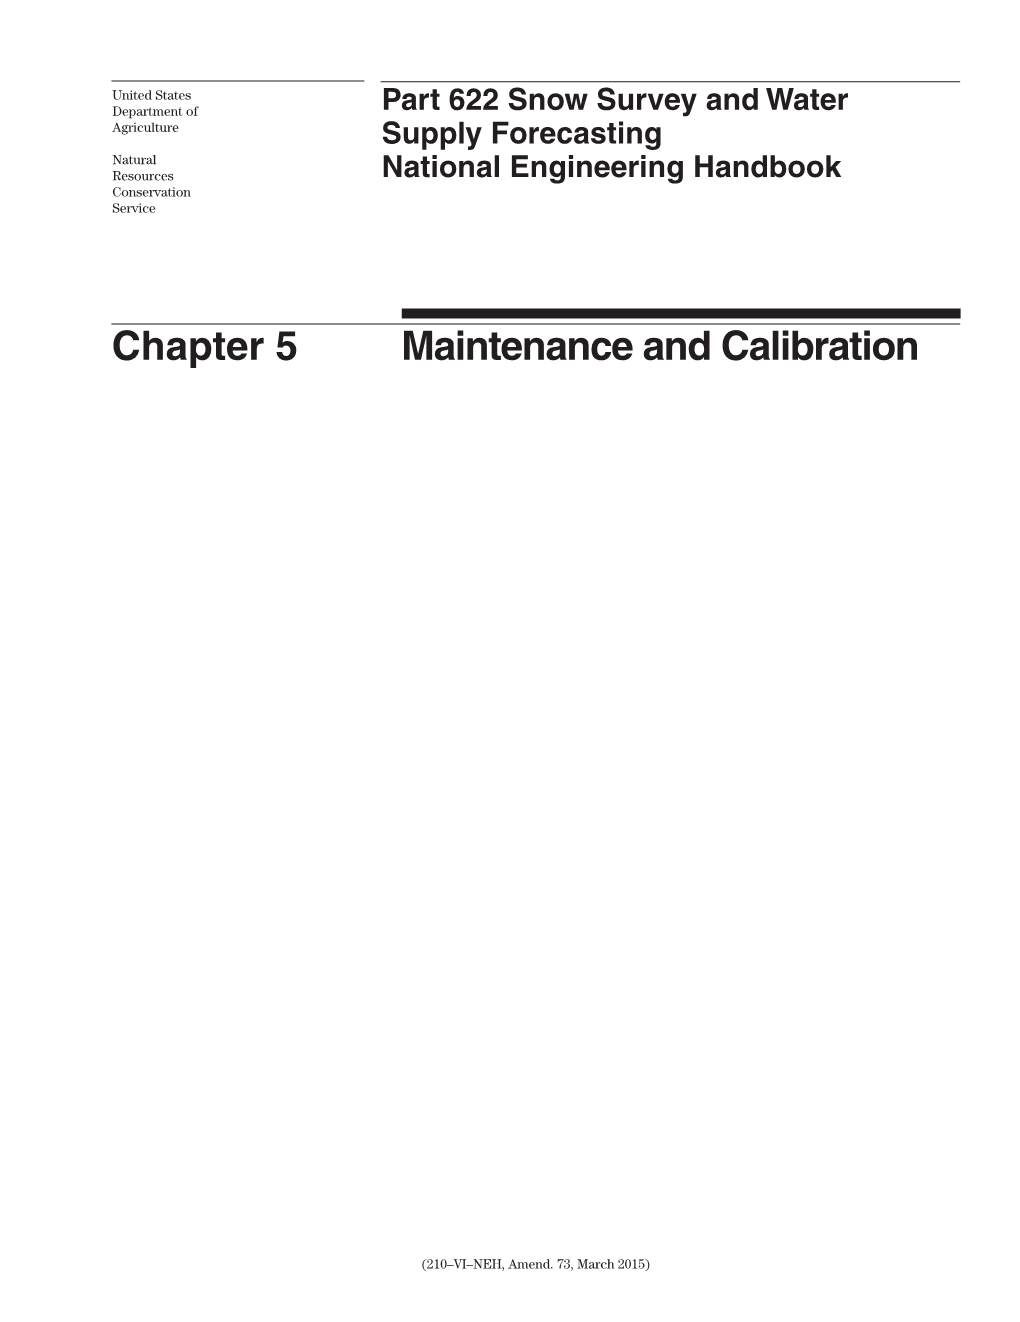 Chapter 5 Maintenance and Calibration